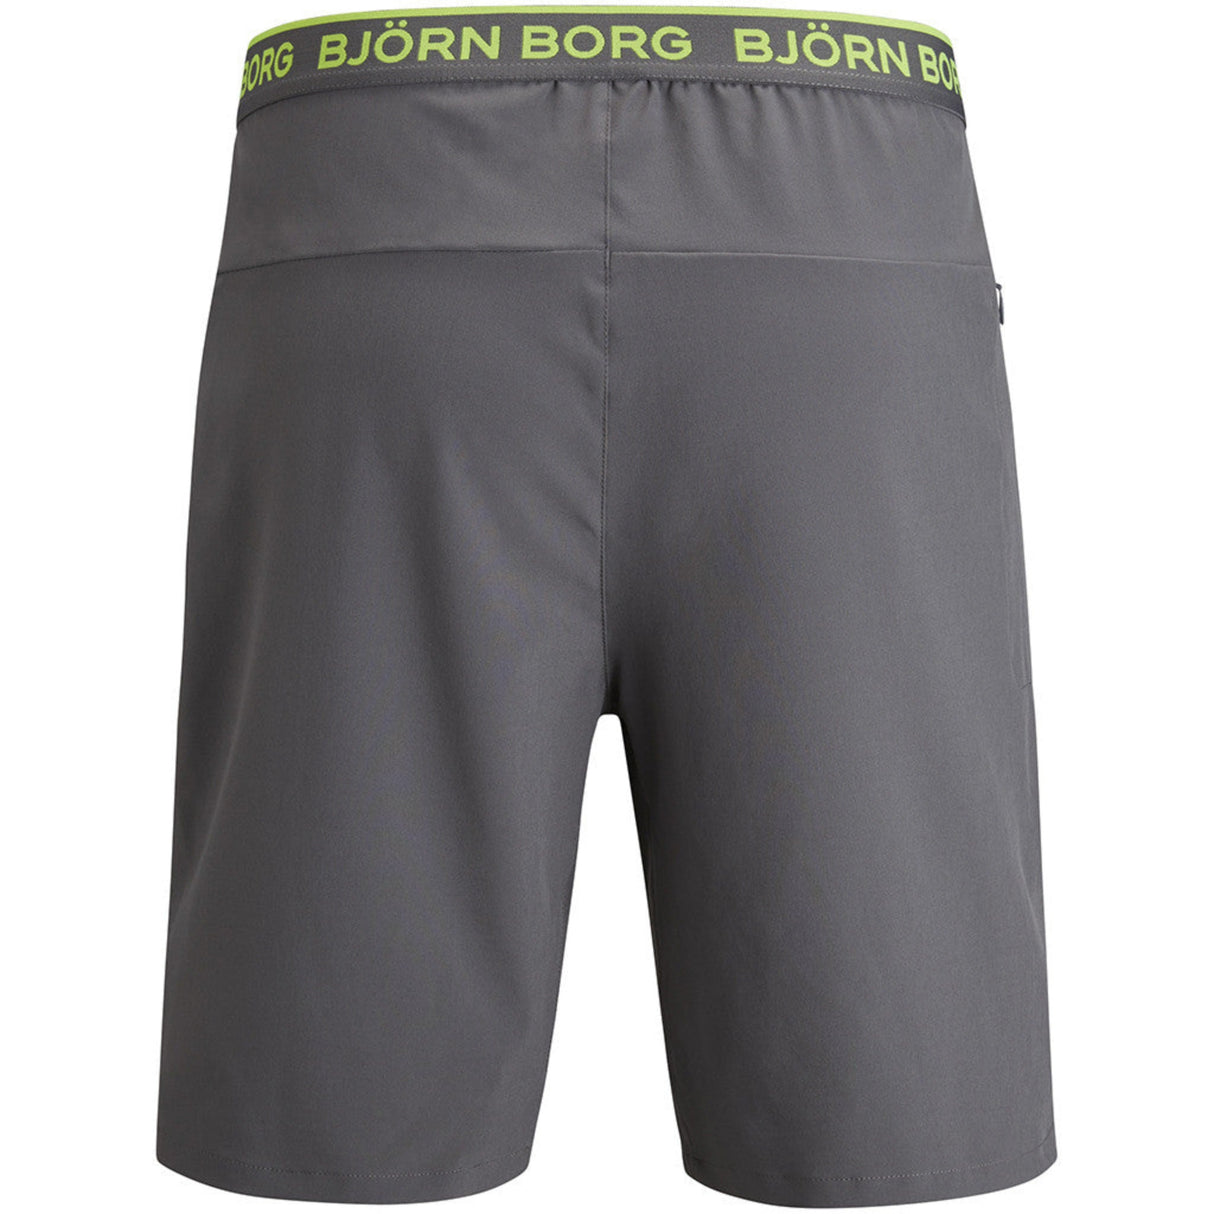 Bjorn Borg Pace Performance men's shorts grey rv